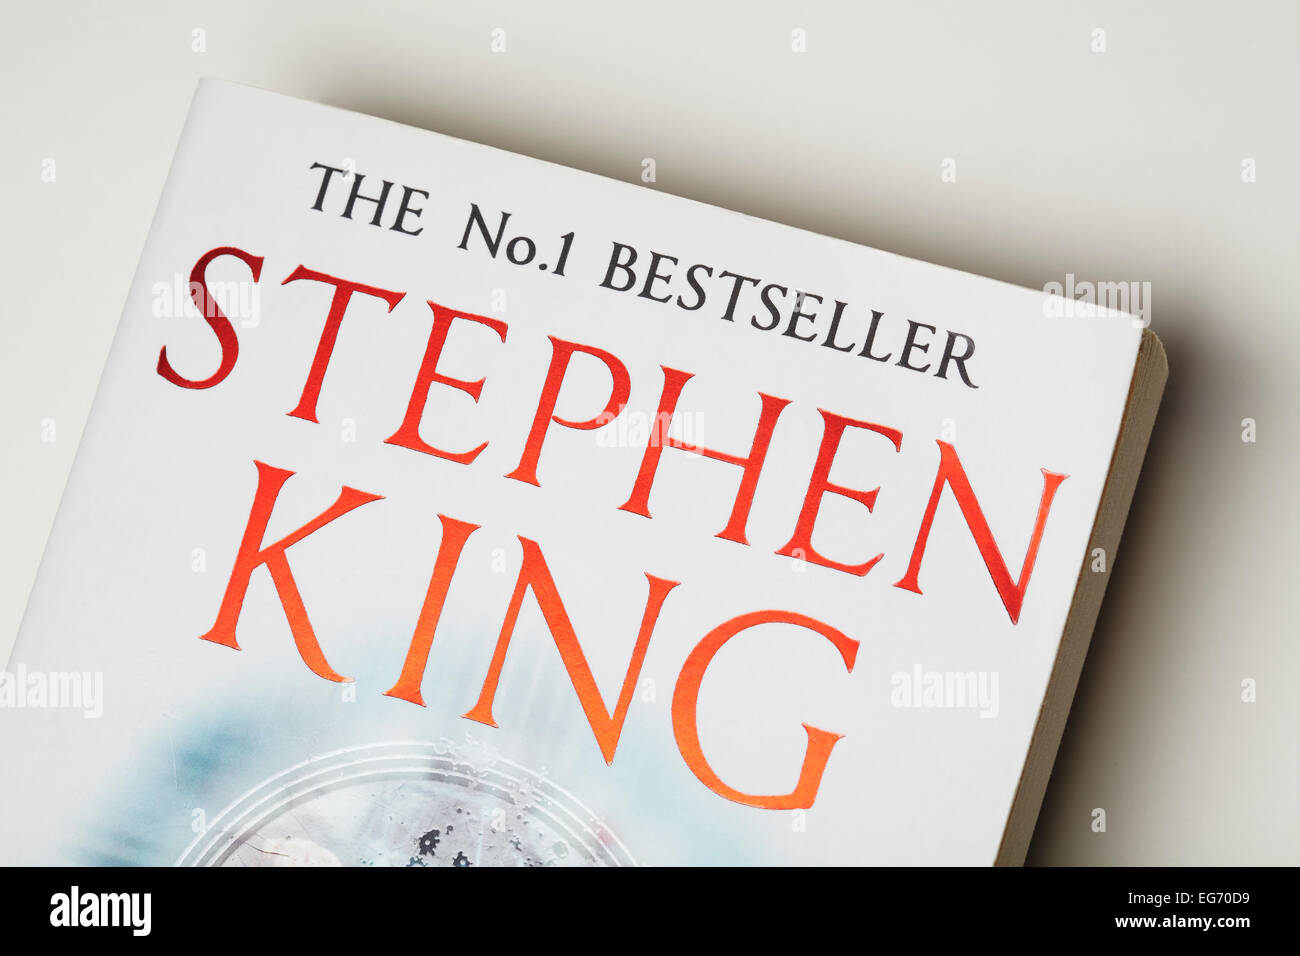 Stephen King book - detail Stock Photo